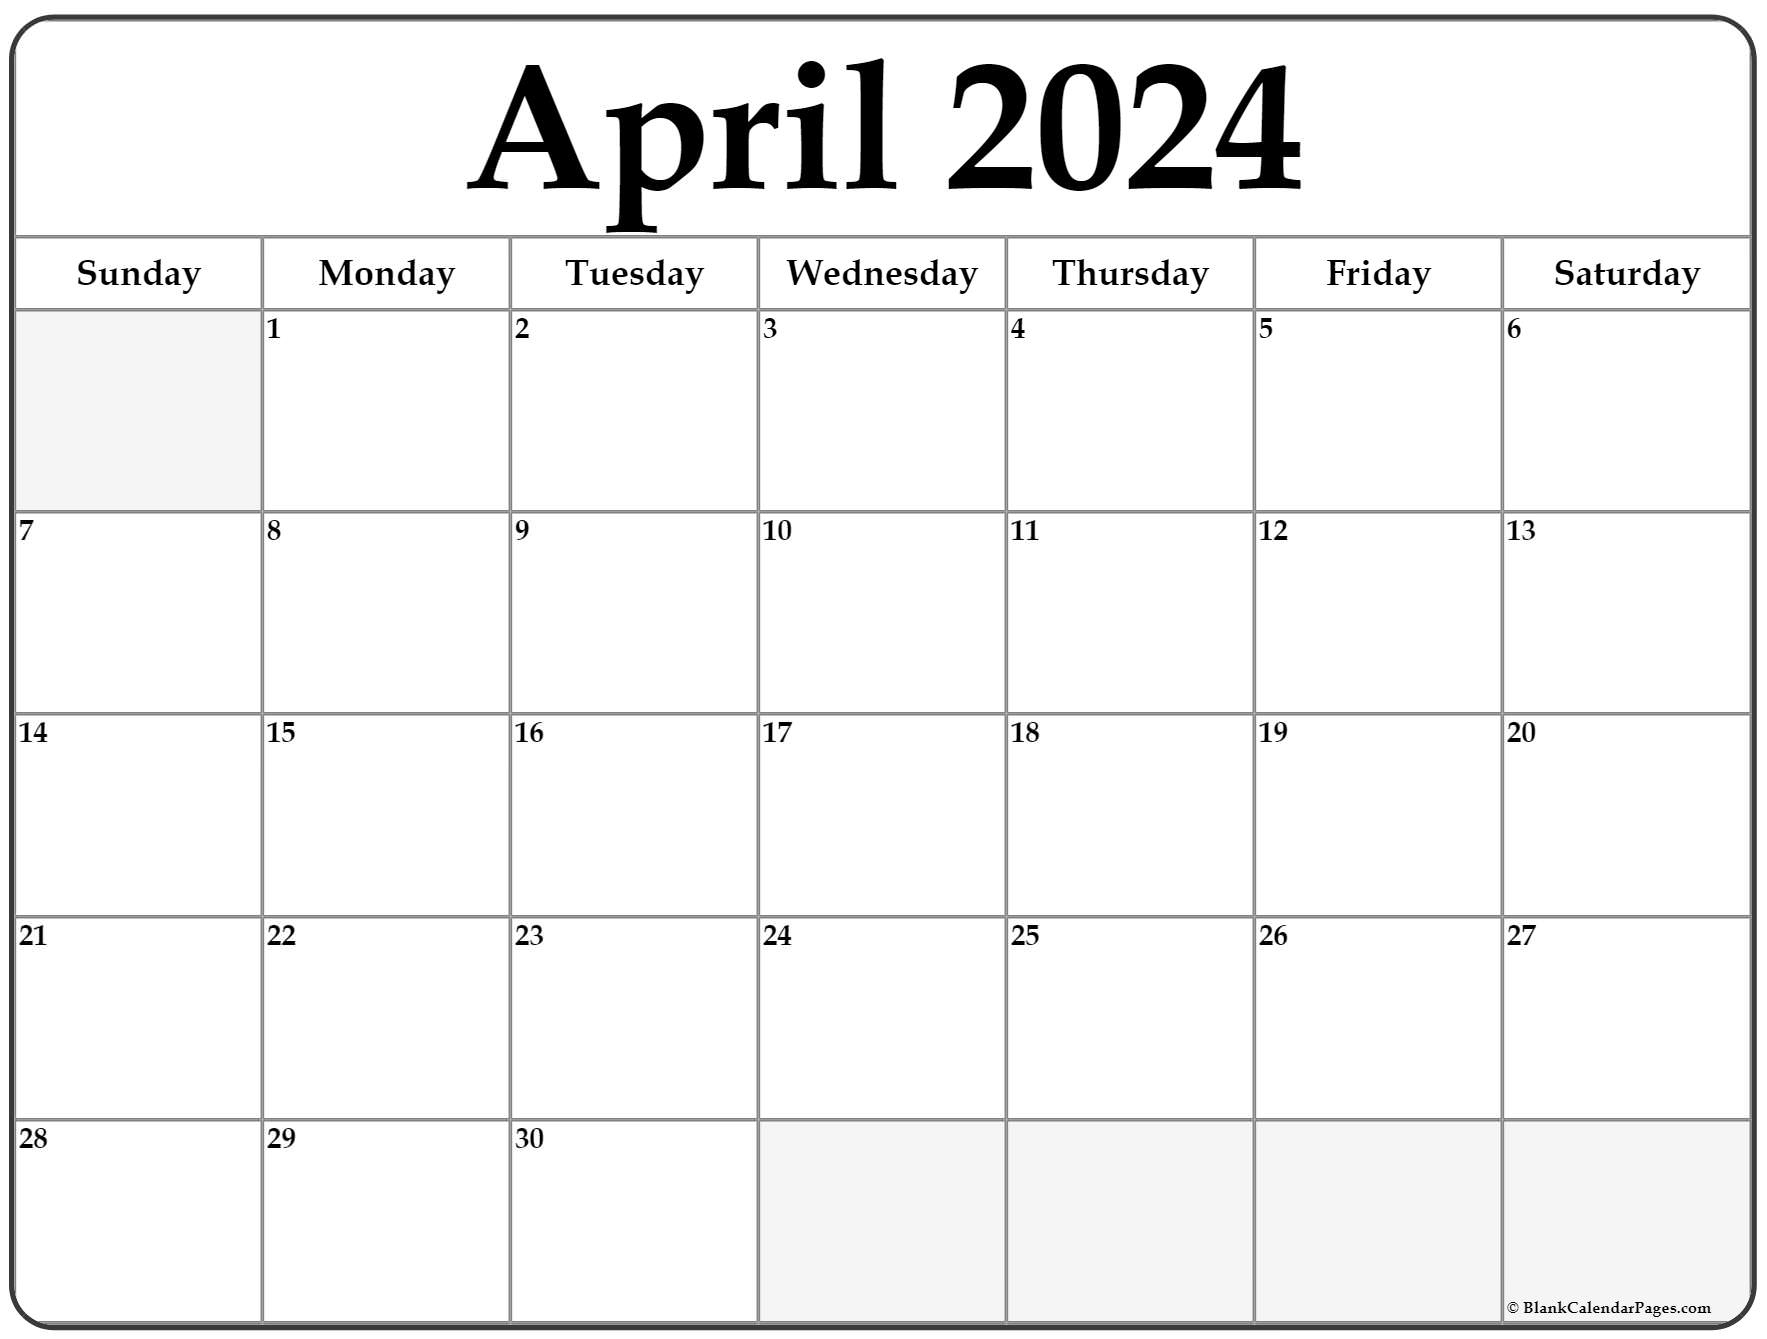 April 2024 Calendar | Free Printable Calendar | April 2024 Calendar Printable Free